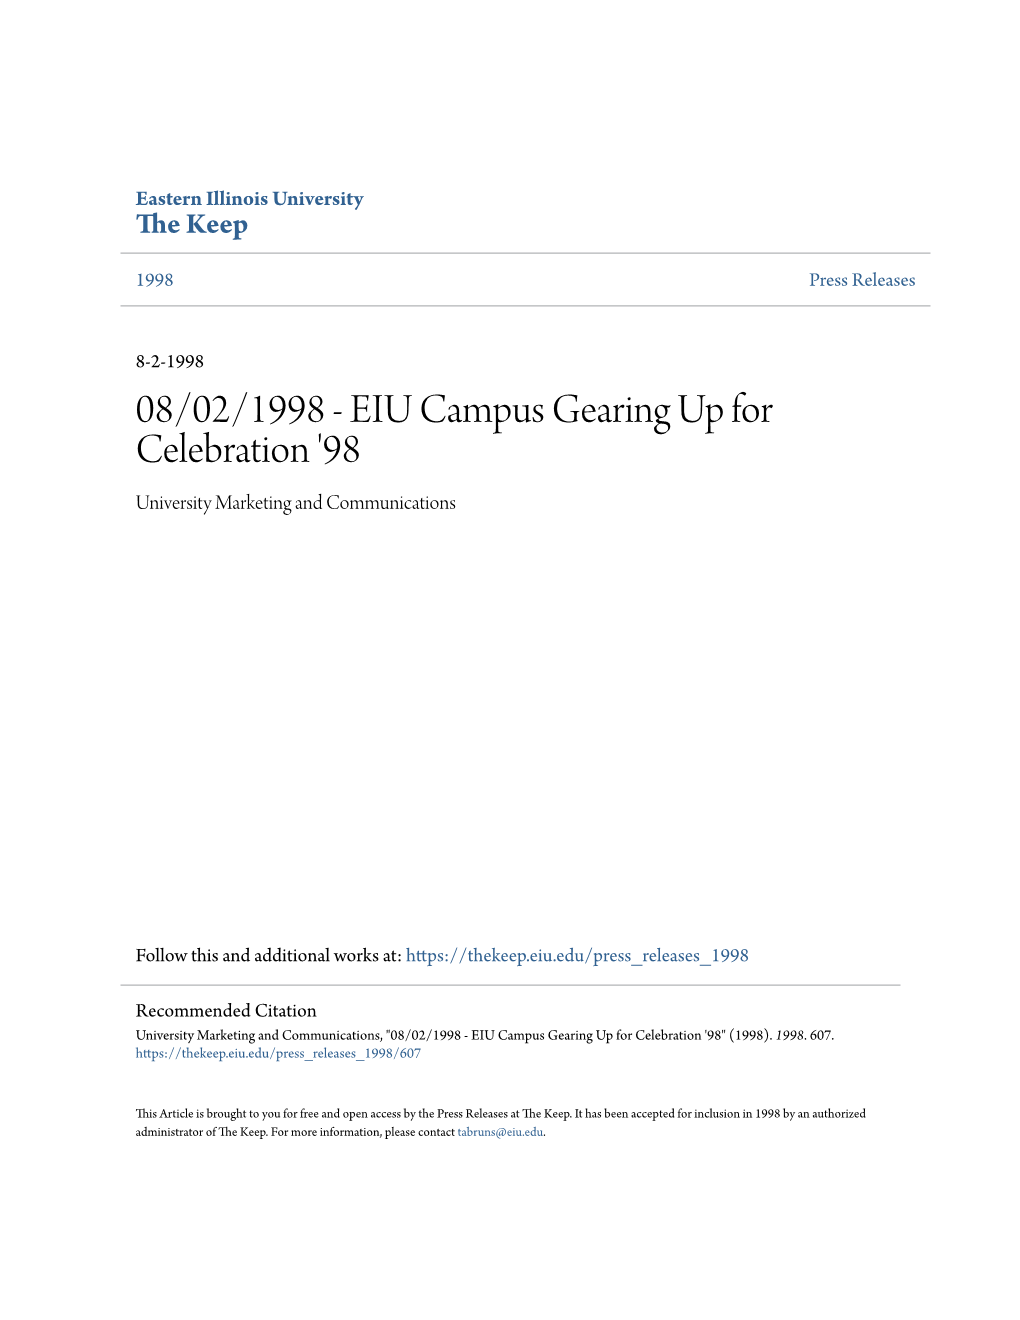 08/02/1998 - EIU Campus Gearing up for Celebration '98 University Marketing and Communications